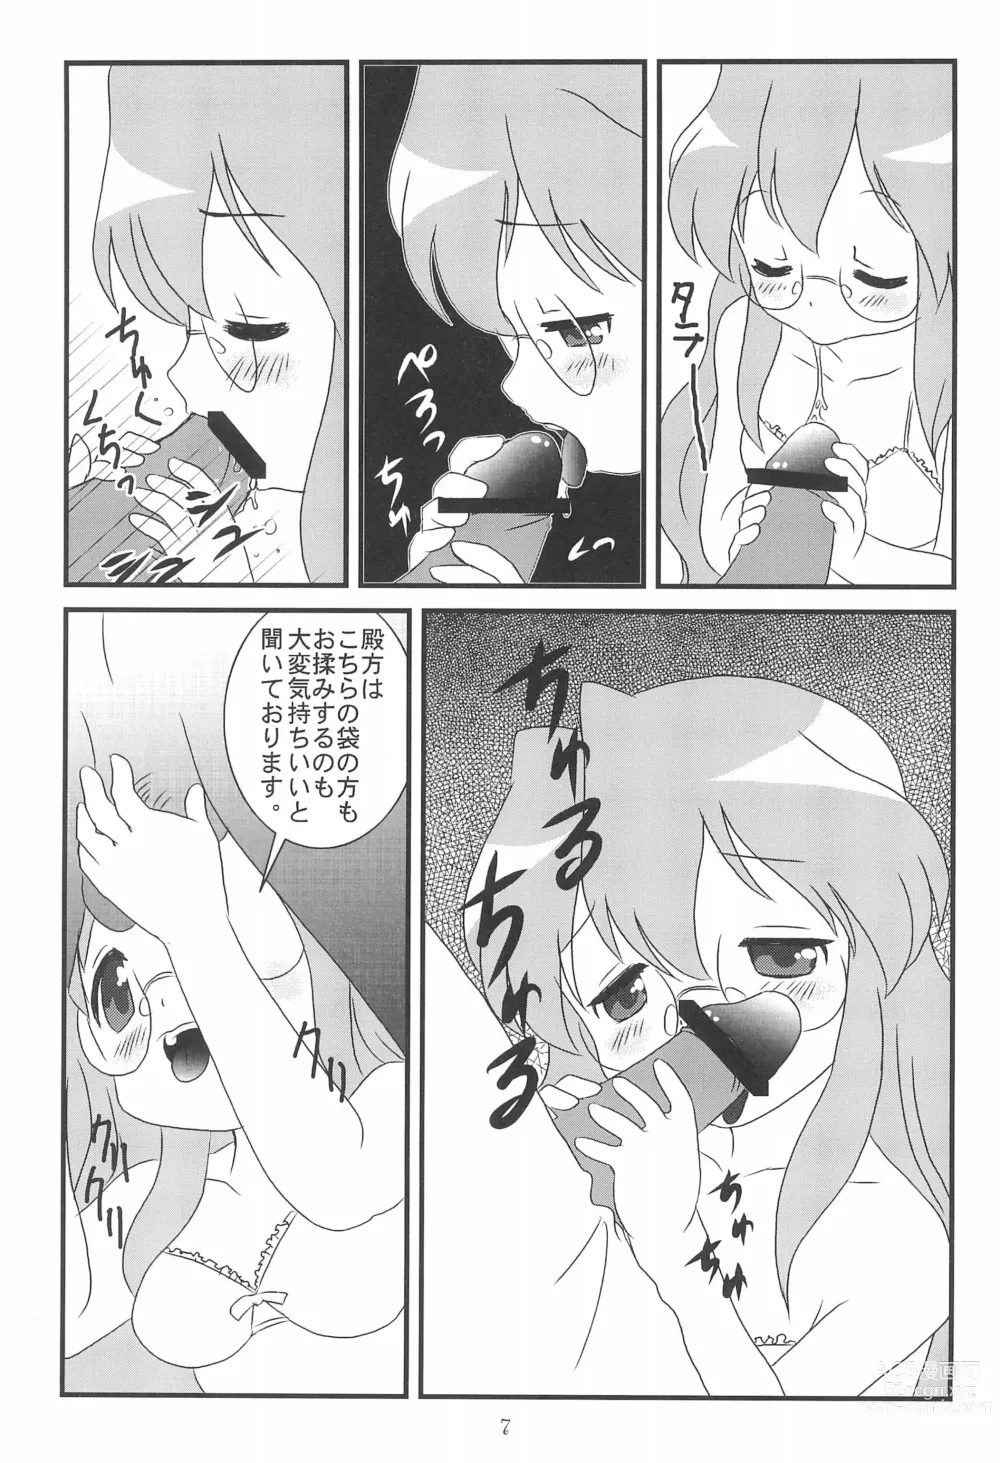 Page 9 of doujinshi Retort